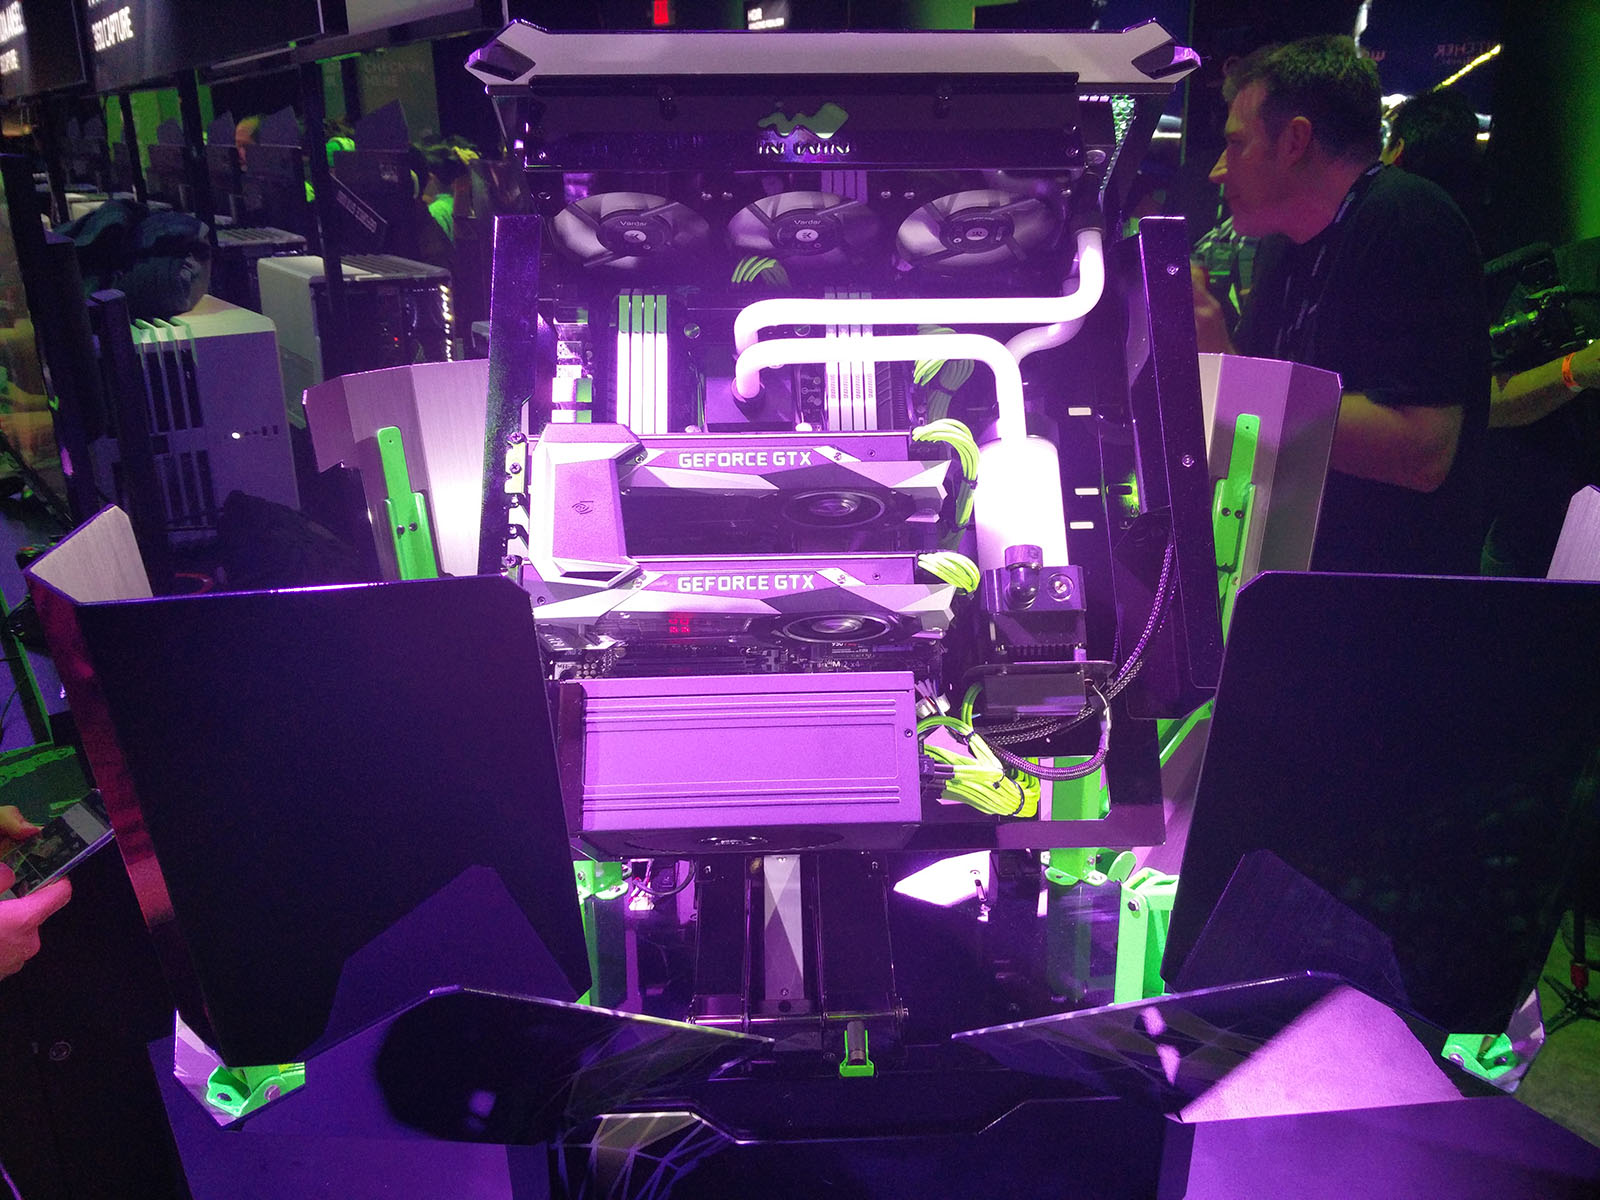 Nvidia Geforce Gtx 1080 1070 Faster Than Titan X 980 Sli Introducing Ansel Physx Audio Vr Enhancements Techgage